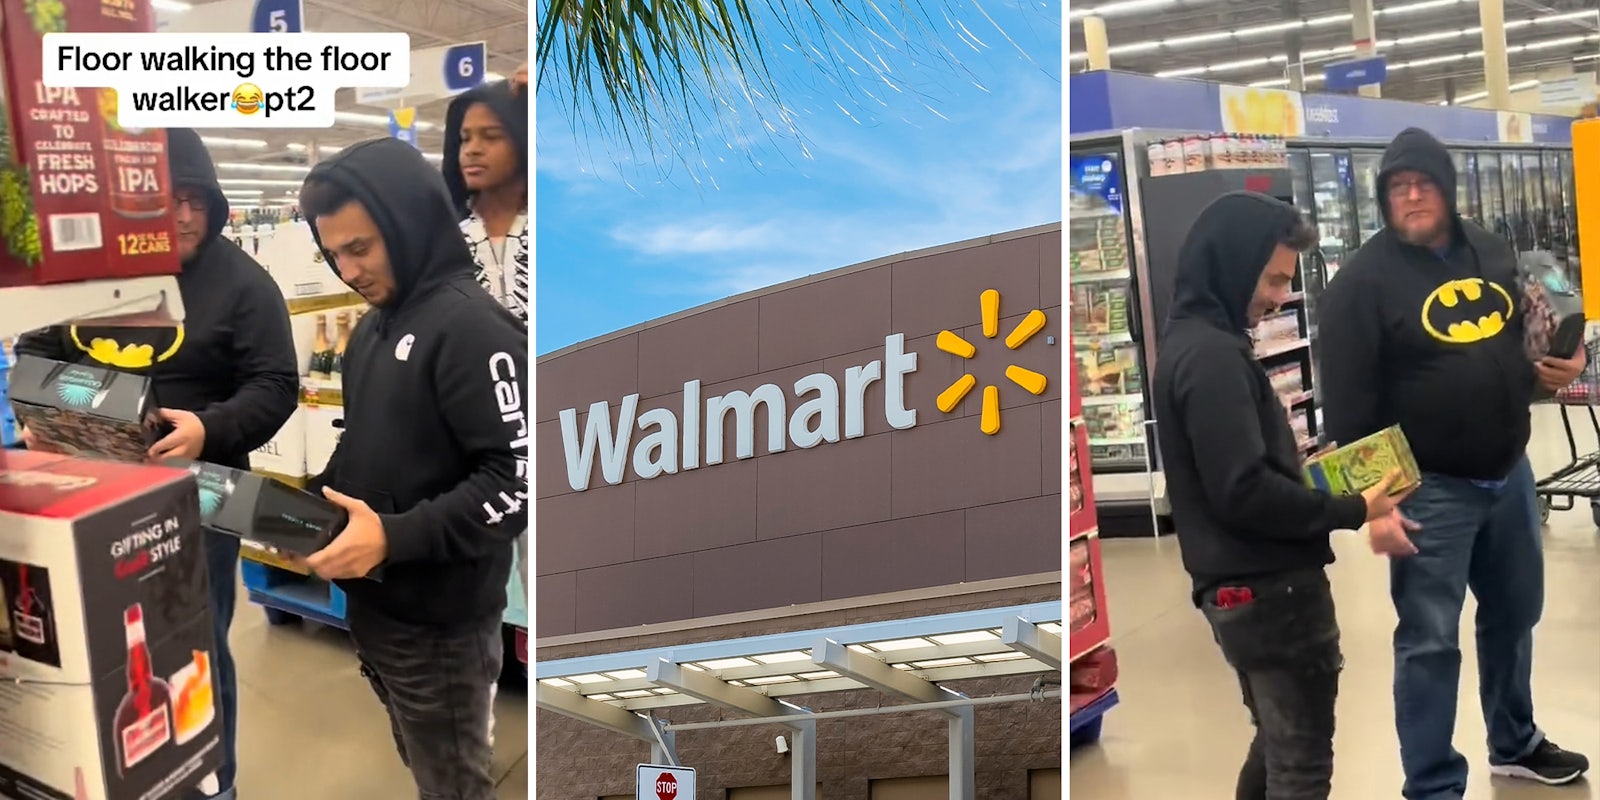 Walmart customers spot a ‘floor walker’ following them.